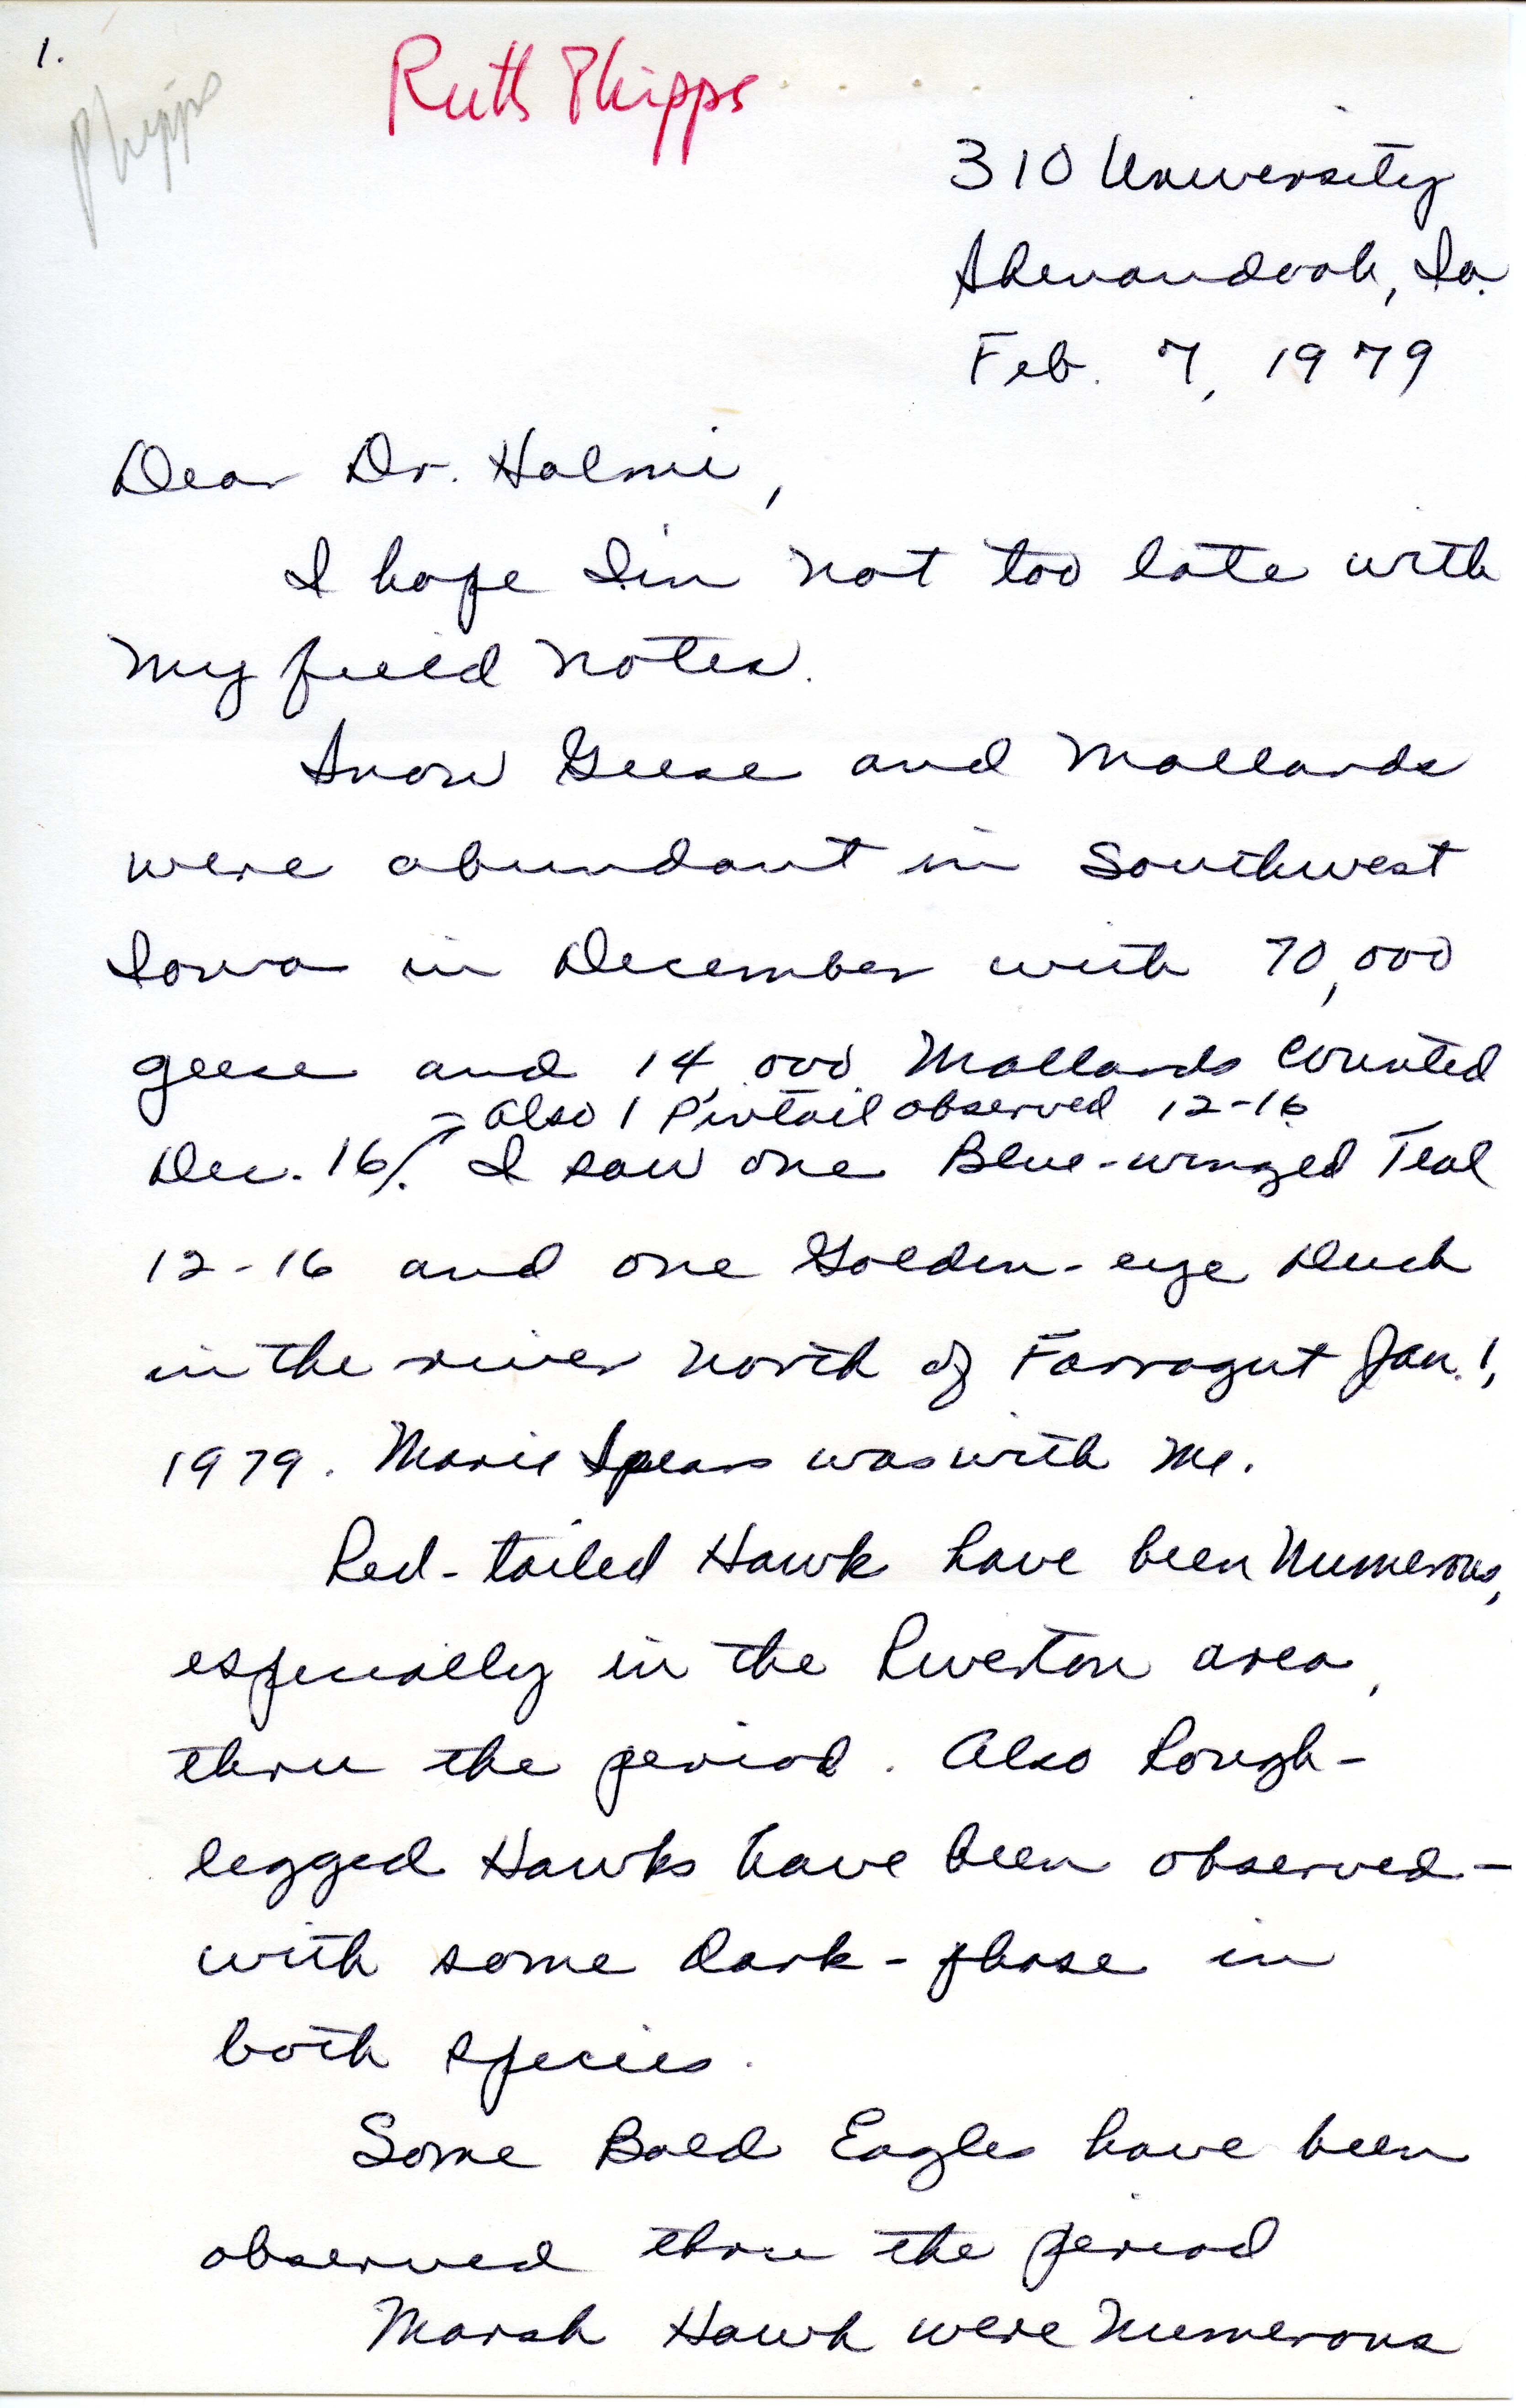 Ruth Phipps letter to Nicholas S. Halmi regarding winter bird sightings, February 7, 1979